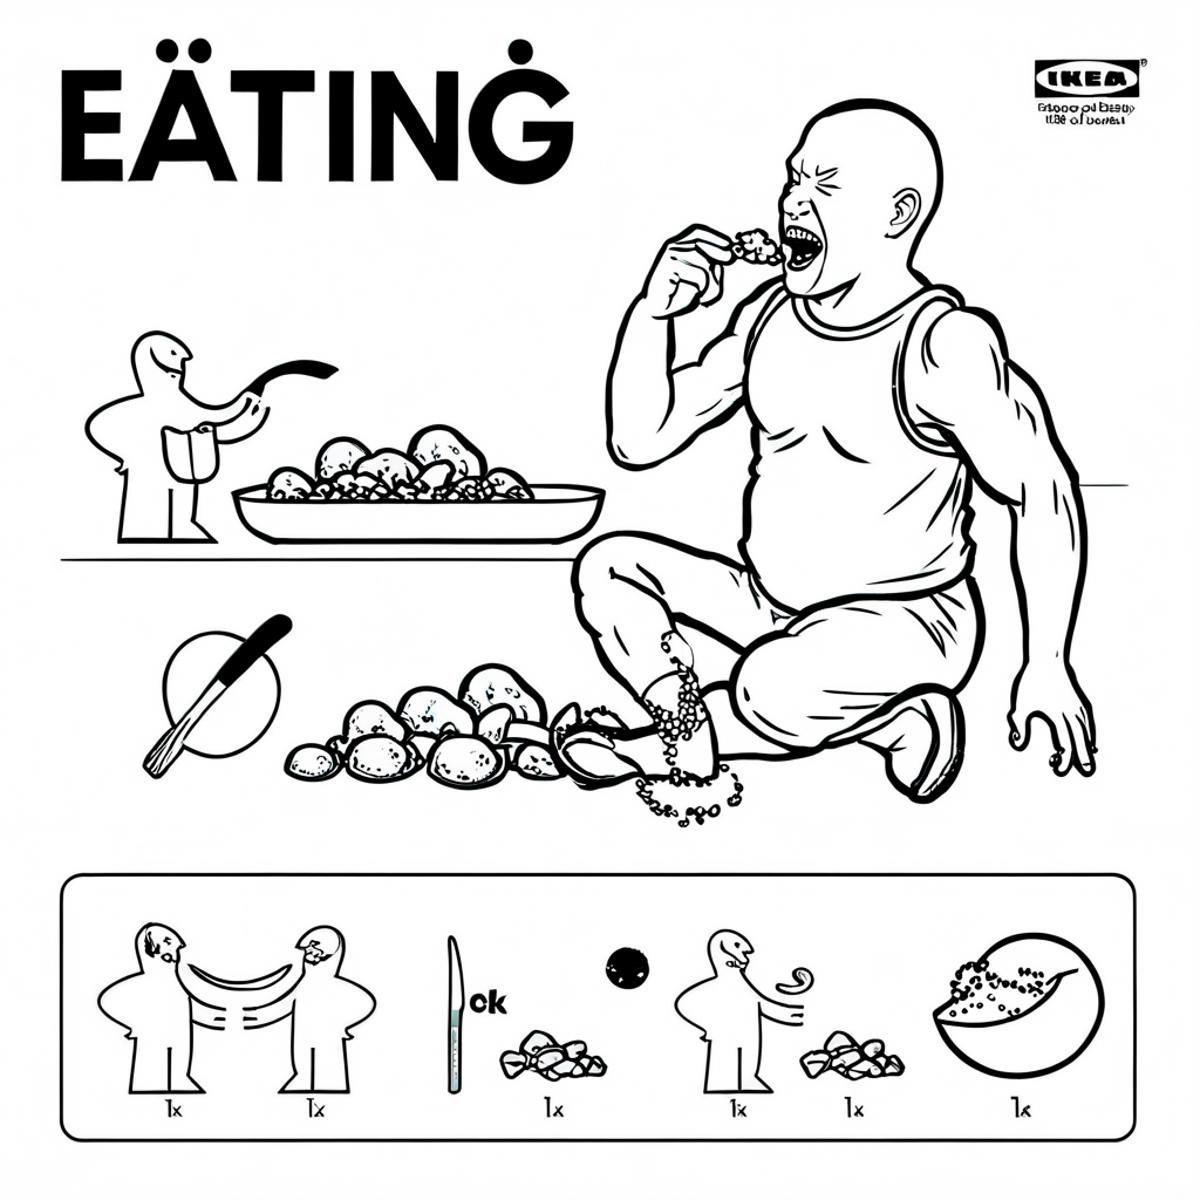 Ikea Instructions - LoRA - SDXL image by Gbronski